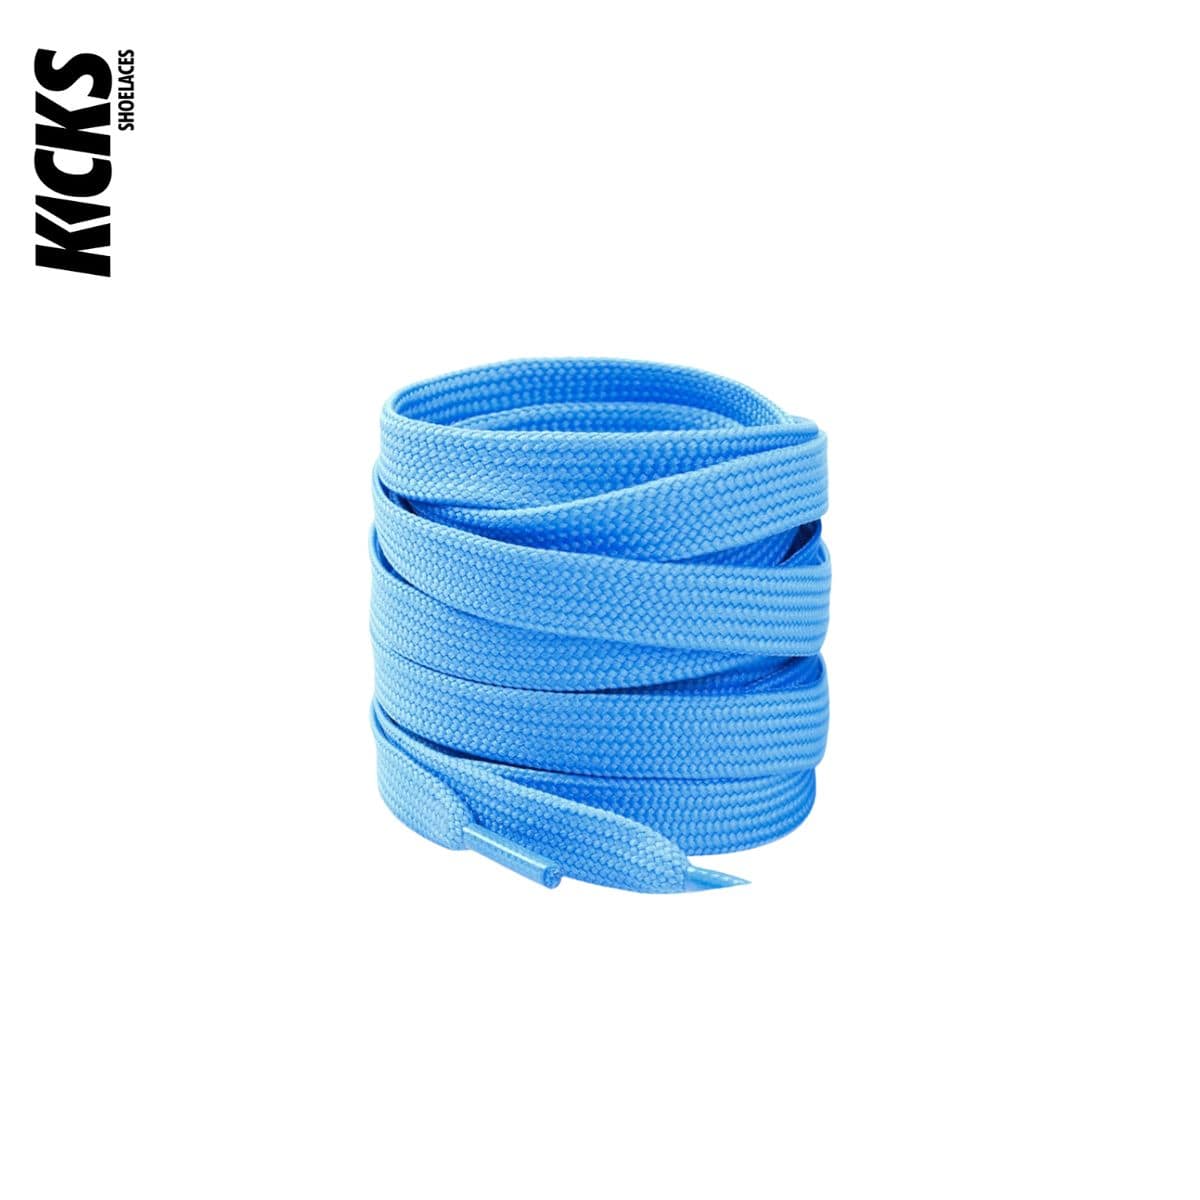 Sky Blue Nike Dunks Shoelace Replacements - Kicks Shoelaces